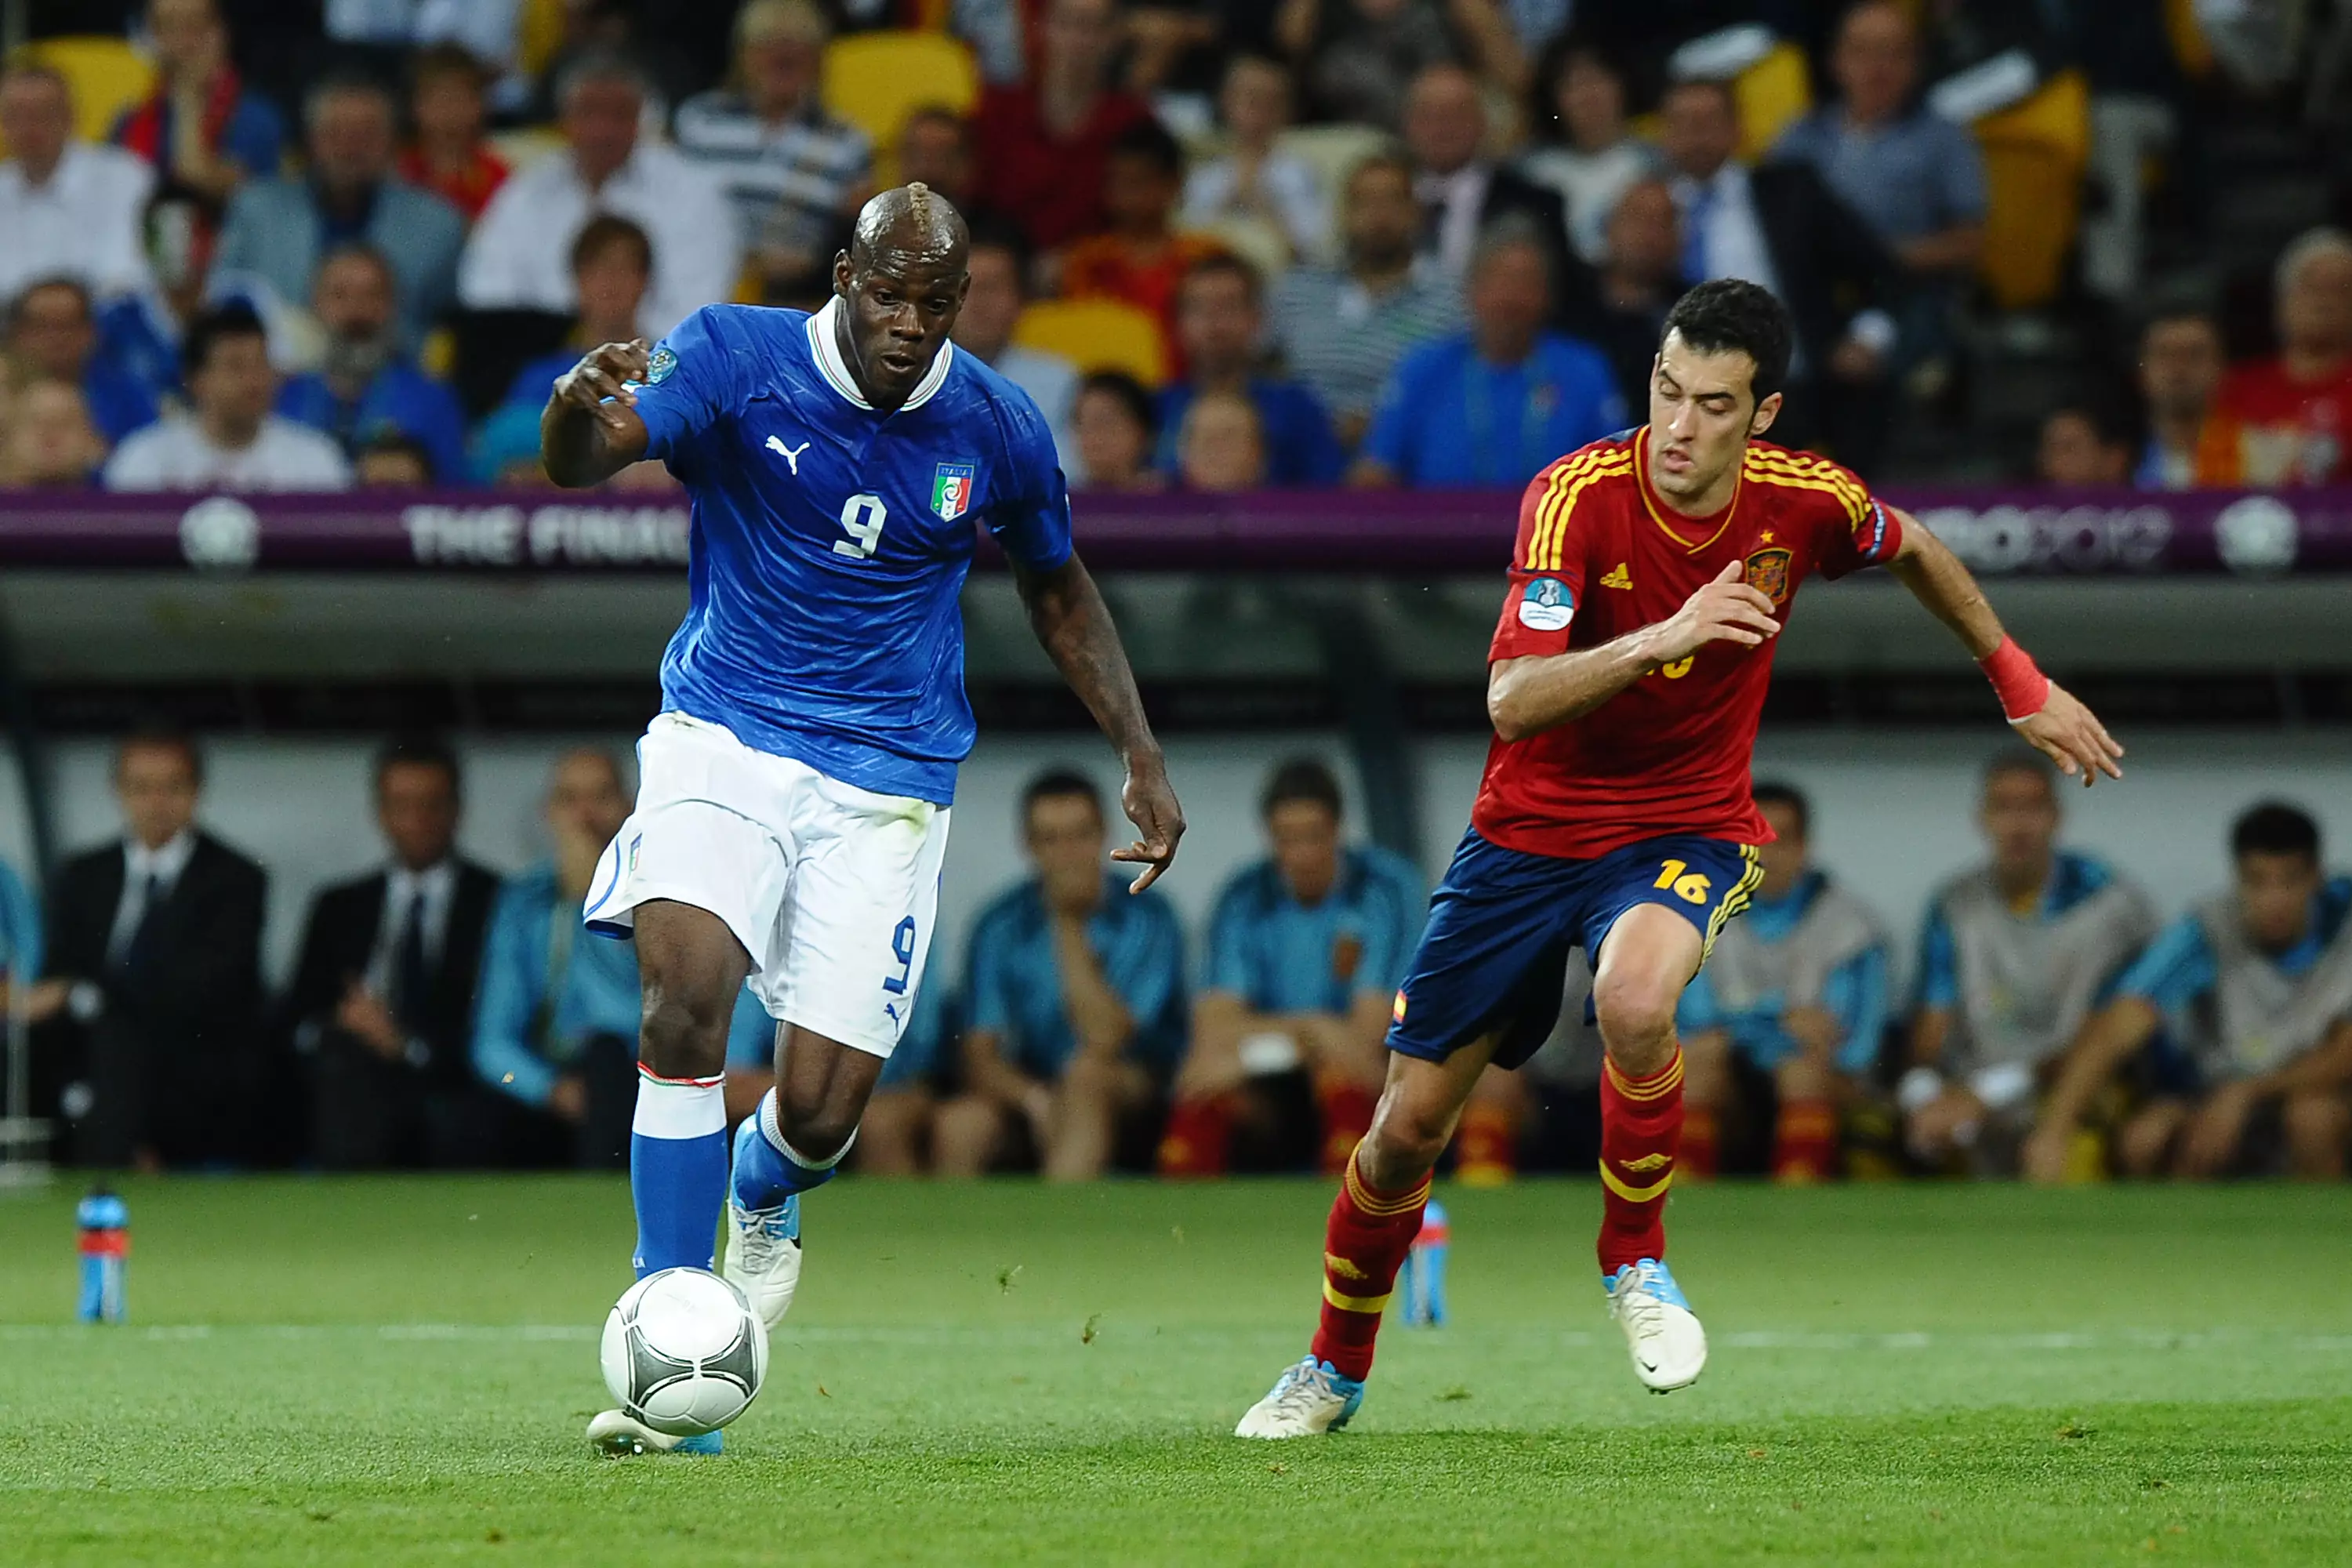 Balotelli representing Italy. Image: PA